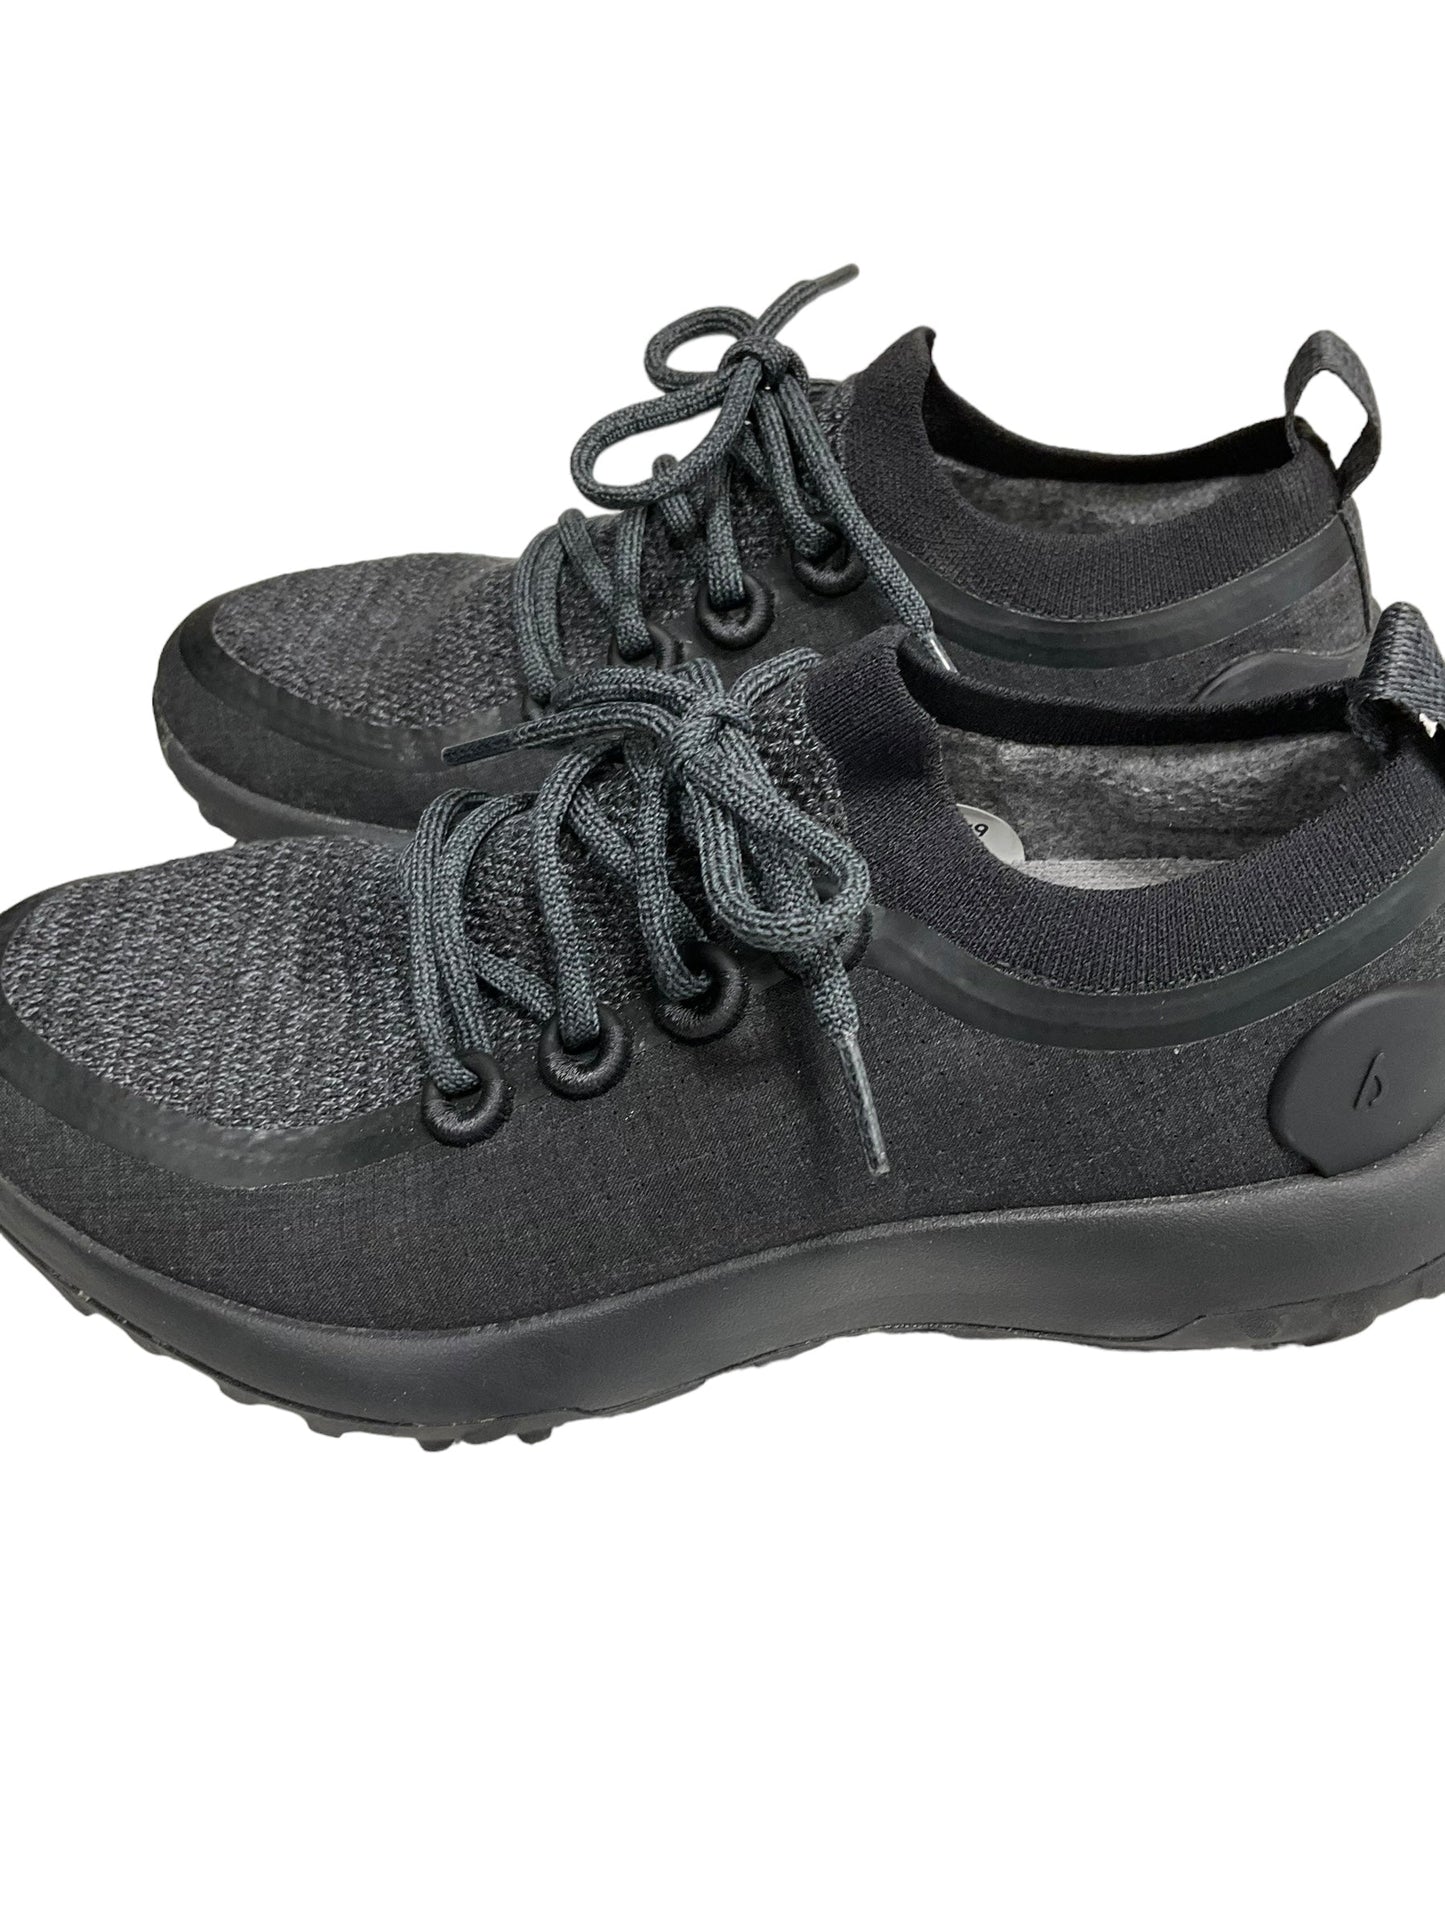 Black Shoes Athletic Allbirds, Size 9